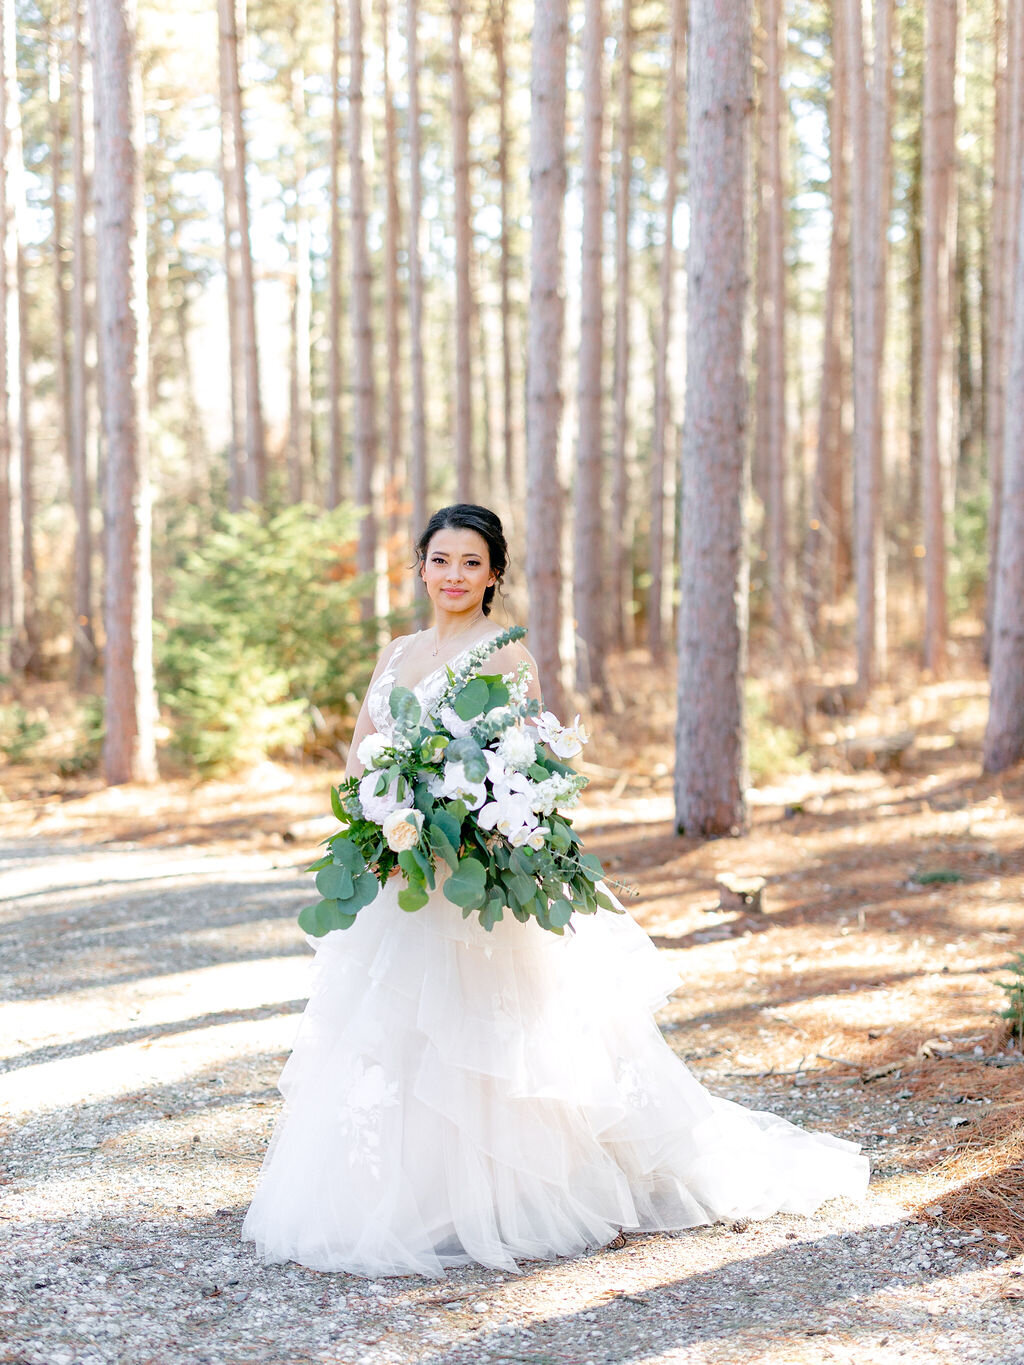 bride-wedding-portrait-woods-pine-big-bouquet